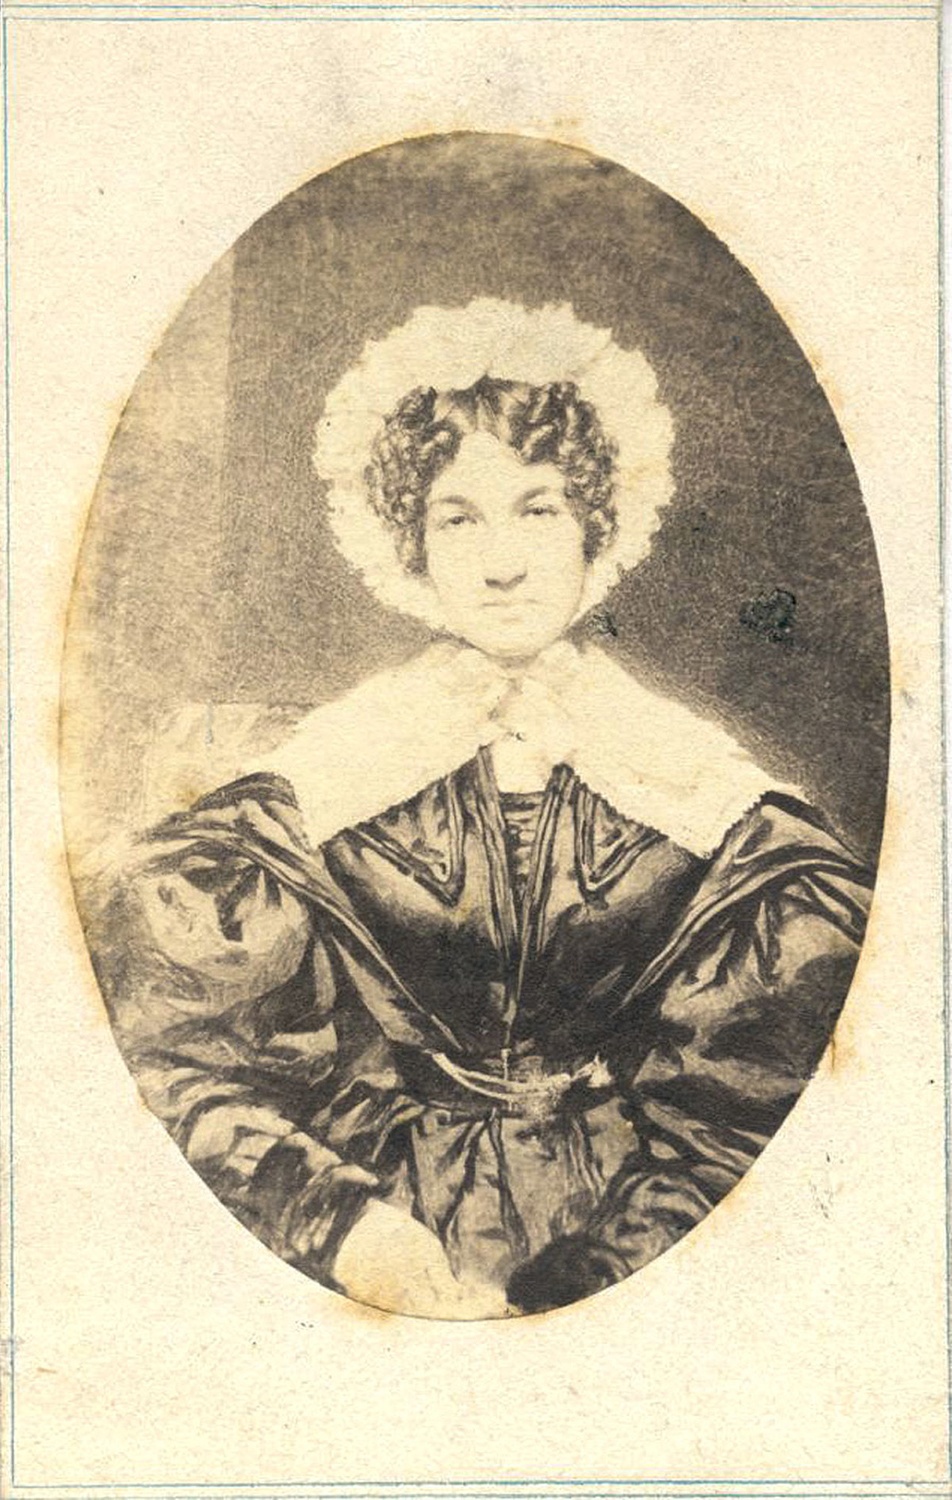 Illustrated portrait of Lucy Bakewell Audubon, c. 1835.